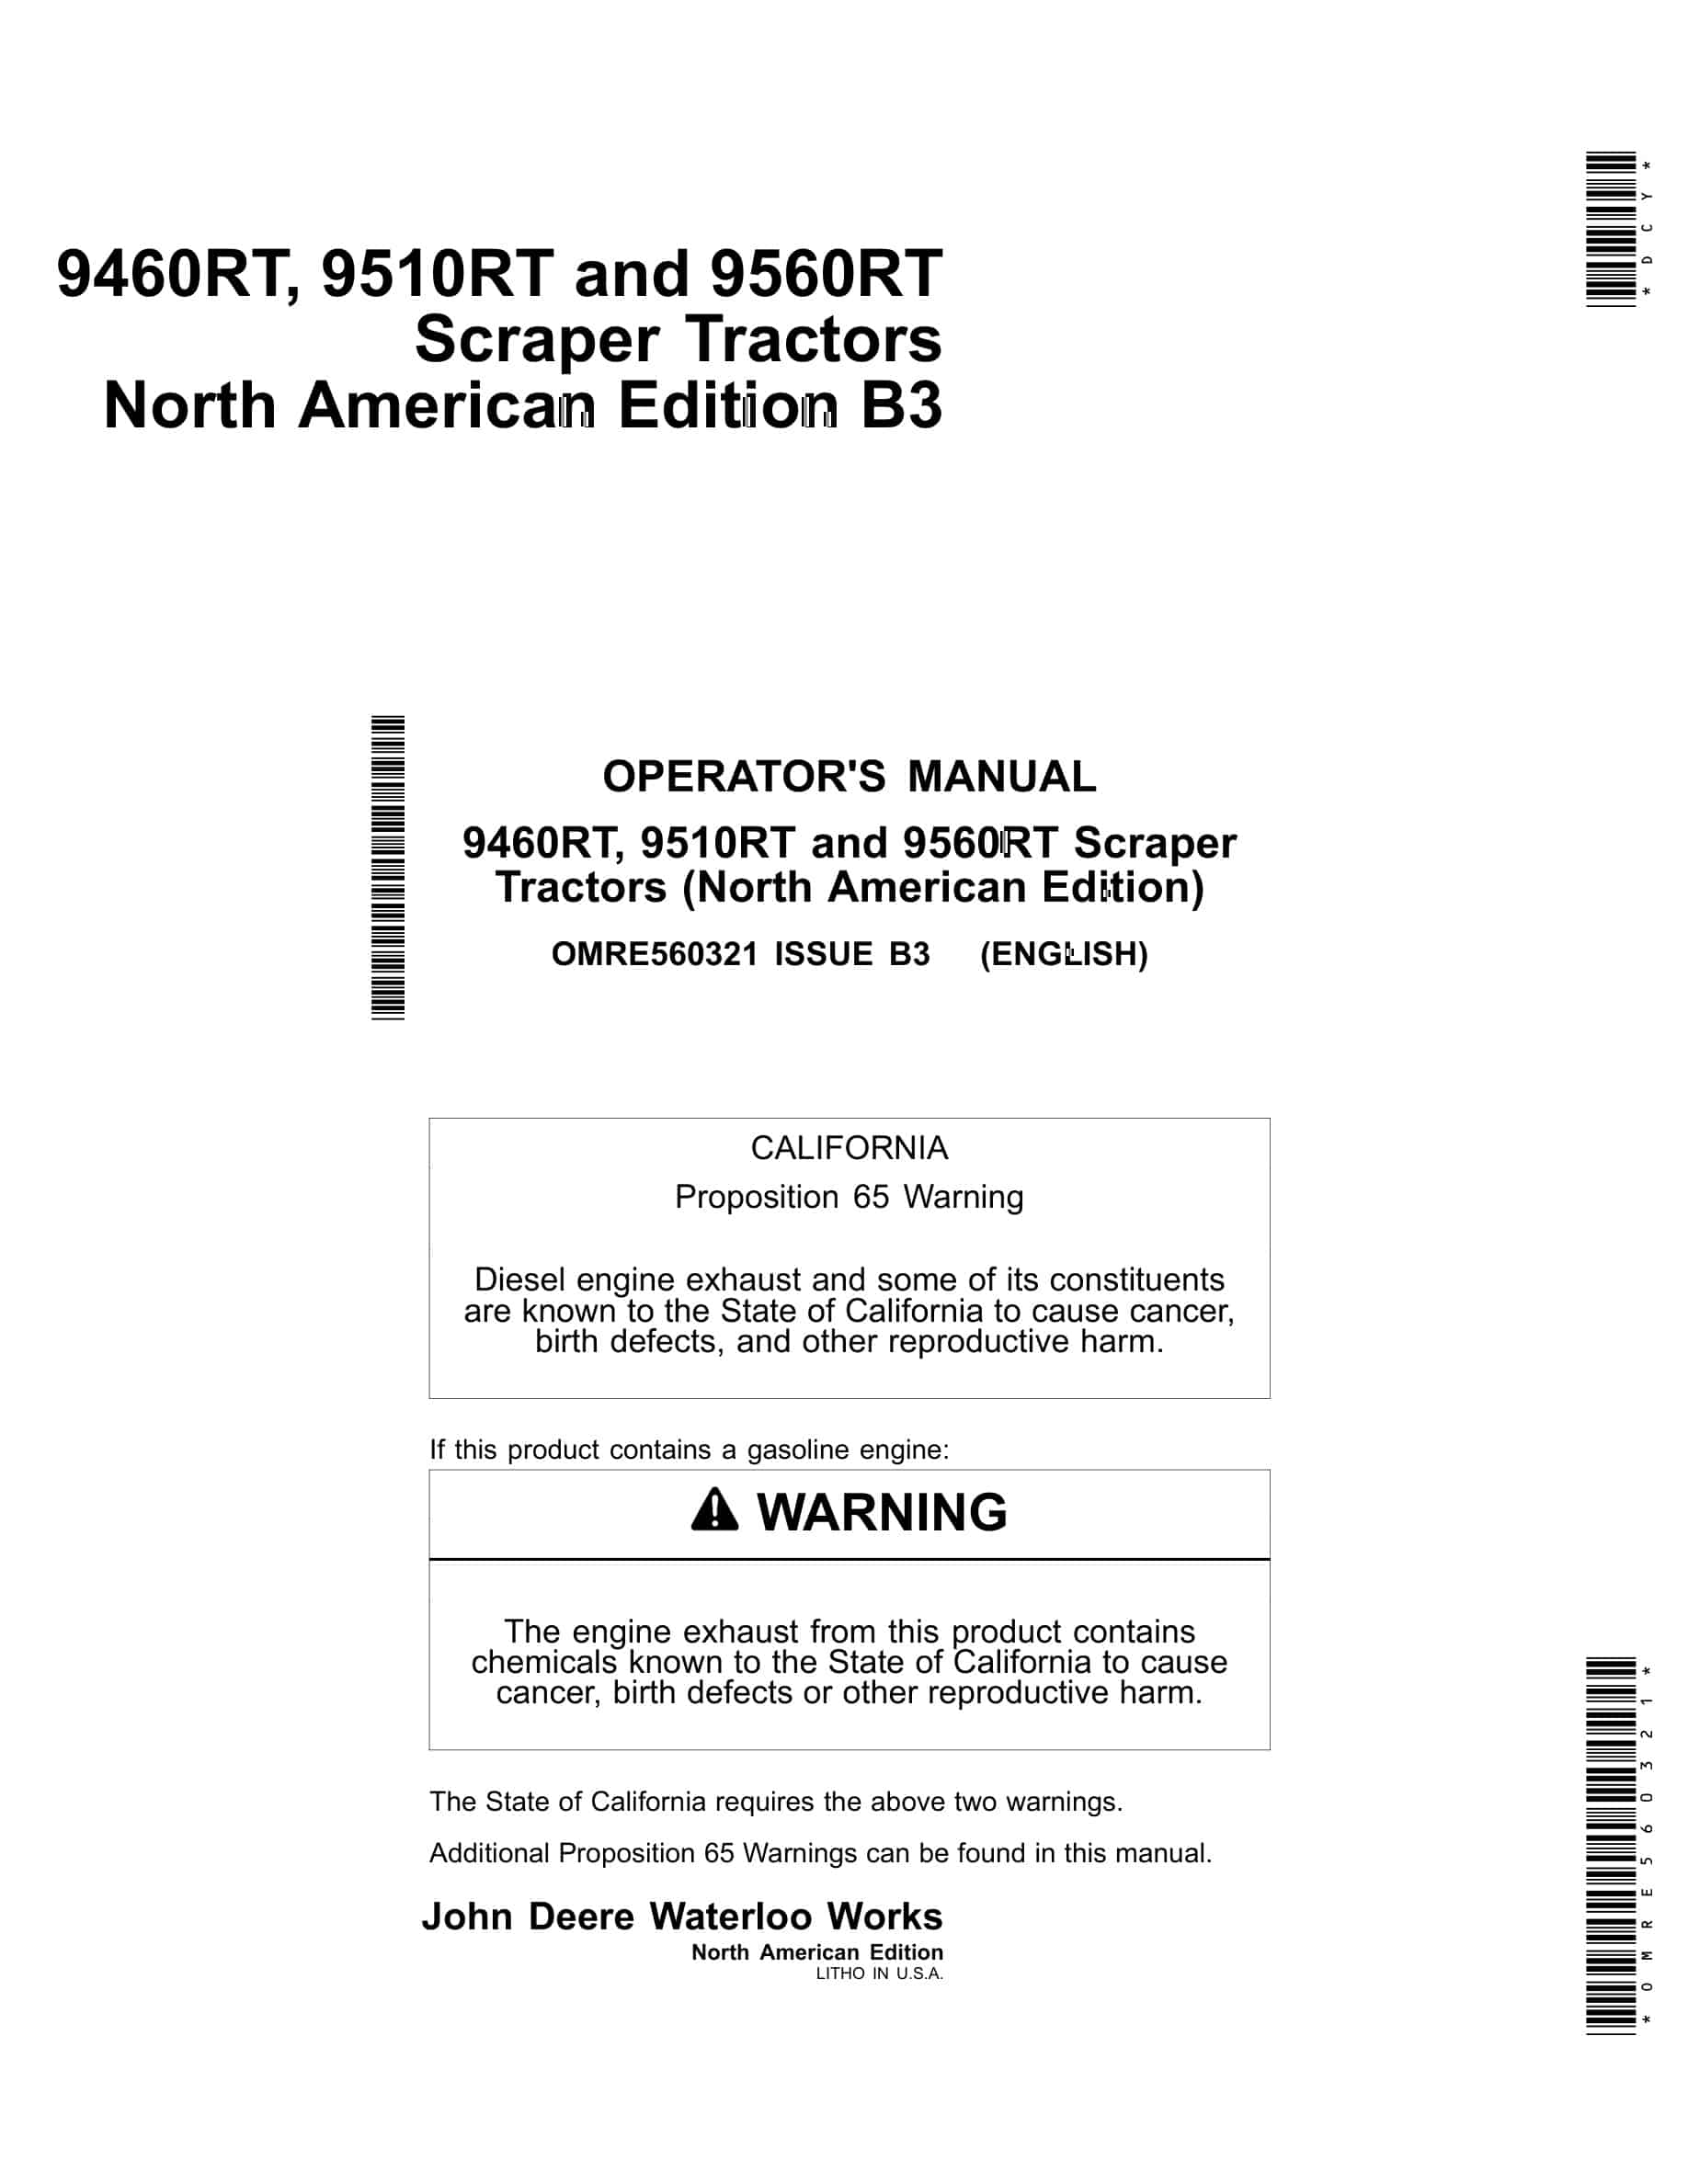 John Deere 9460RT, 9510RT and 9560RT Tractor Operator Manual OMRE560321-1